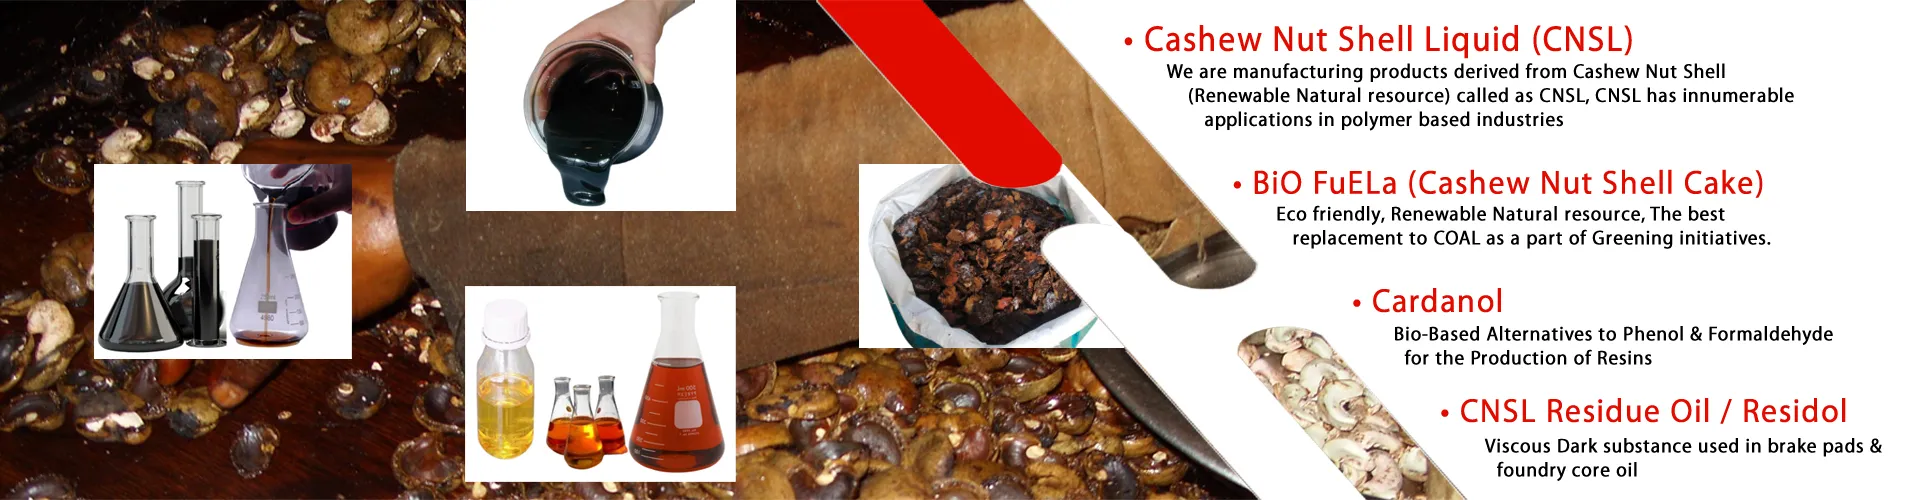 BiO FuELa (Cashew  Nut Shell Cake), Cashew Nut Shell Liquid (CNSL), Cardanol & CNSL Residue Oil / Residol